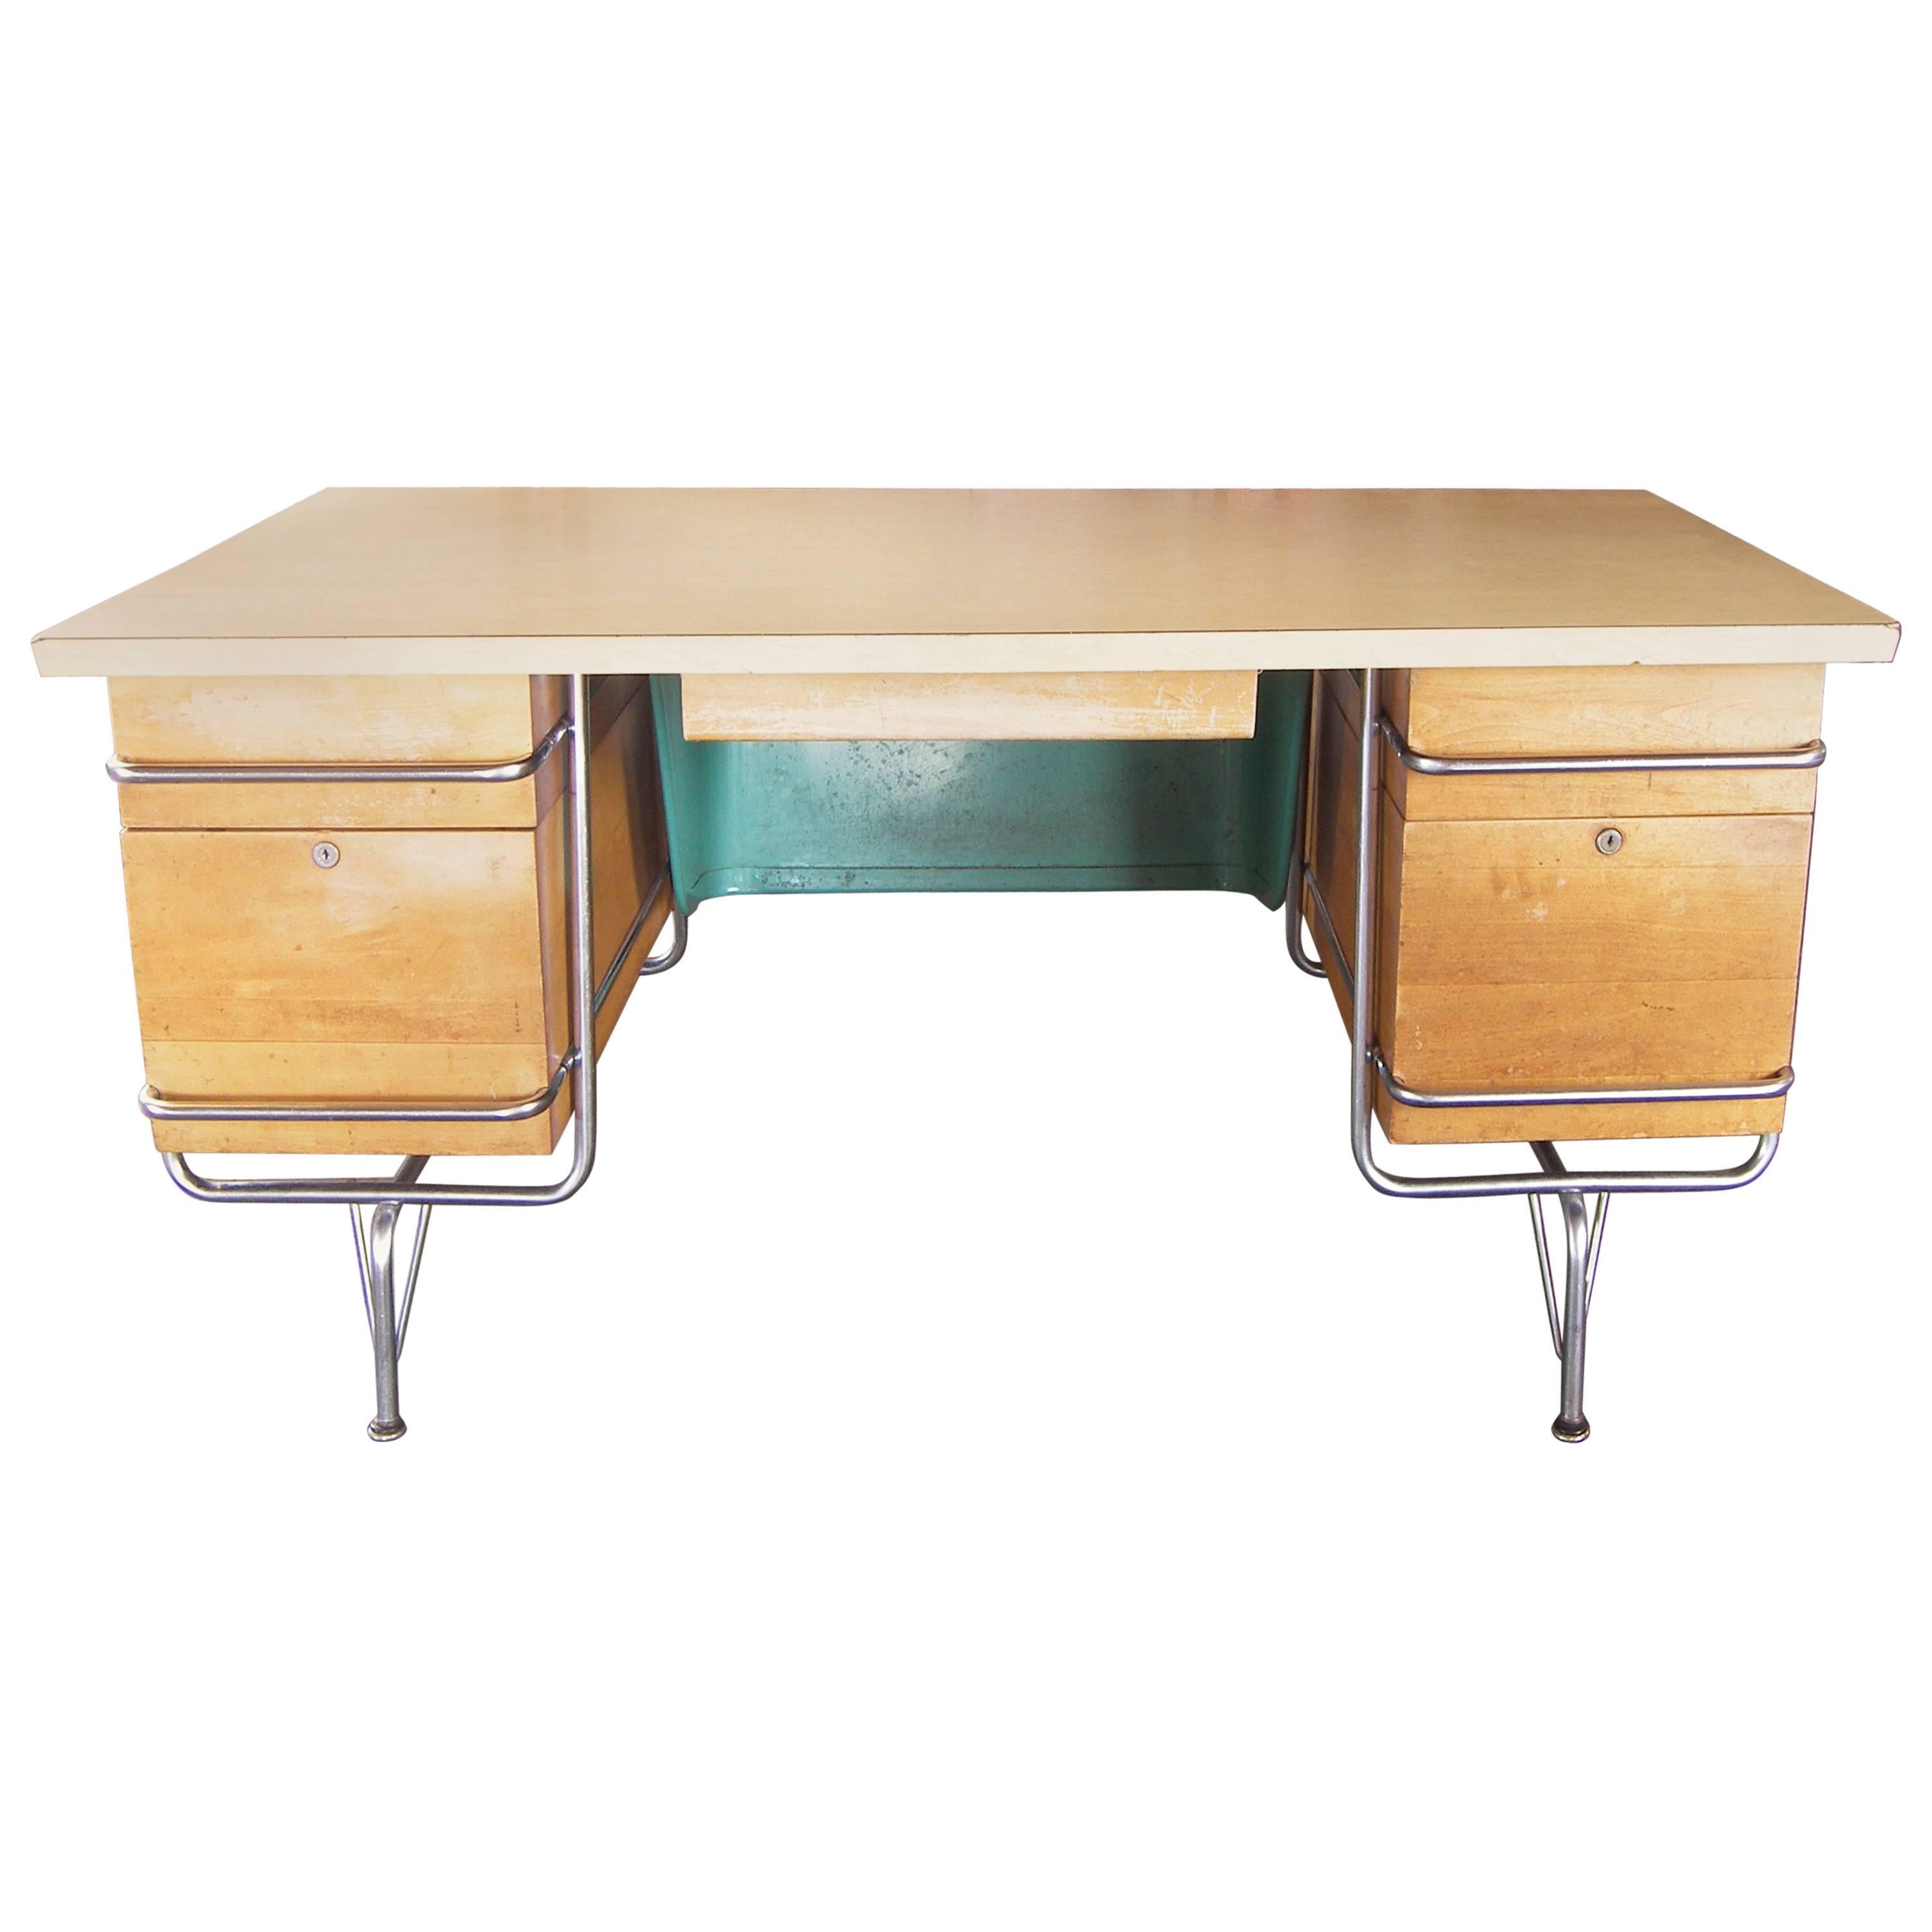 1950's Mid-Century Modern Heywood Wakefield Trimline Chrome & Wood Desk